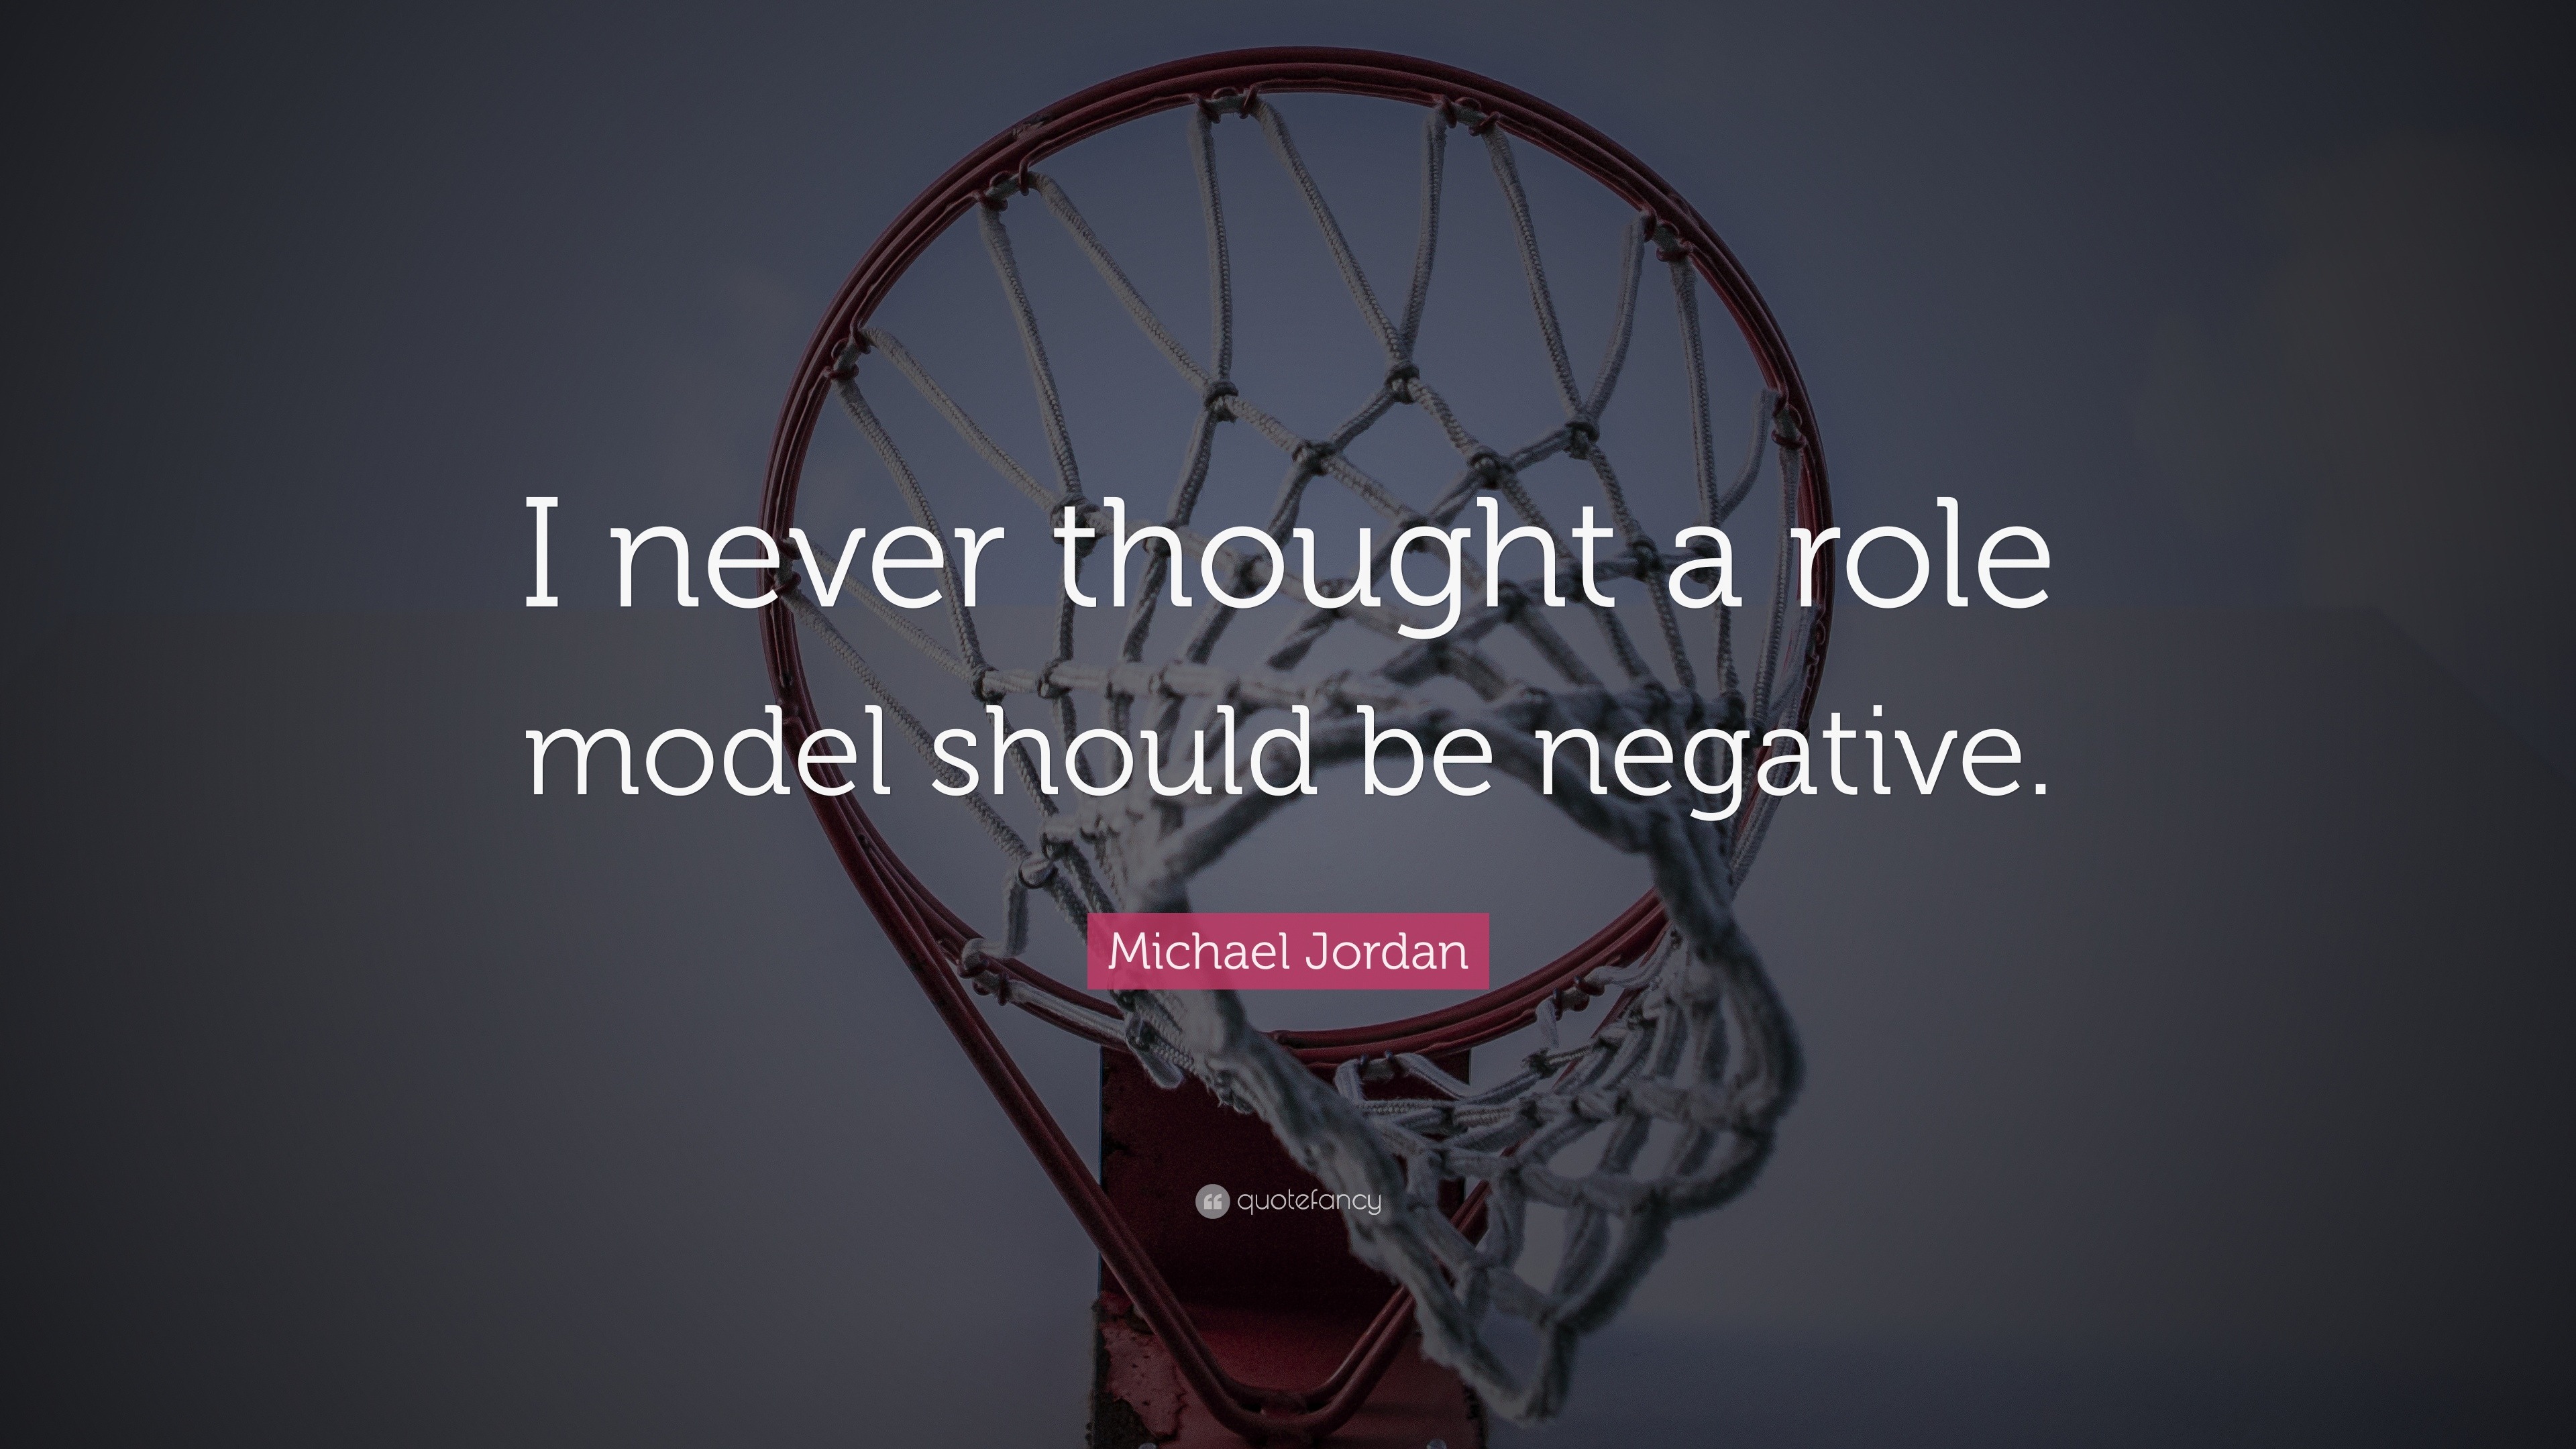 Michael Jordan “I never thought role model should be